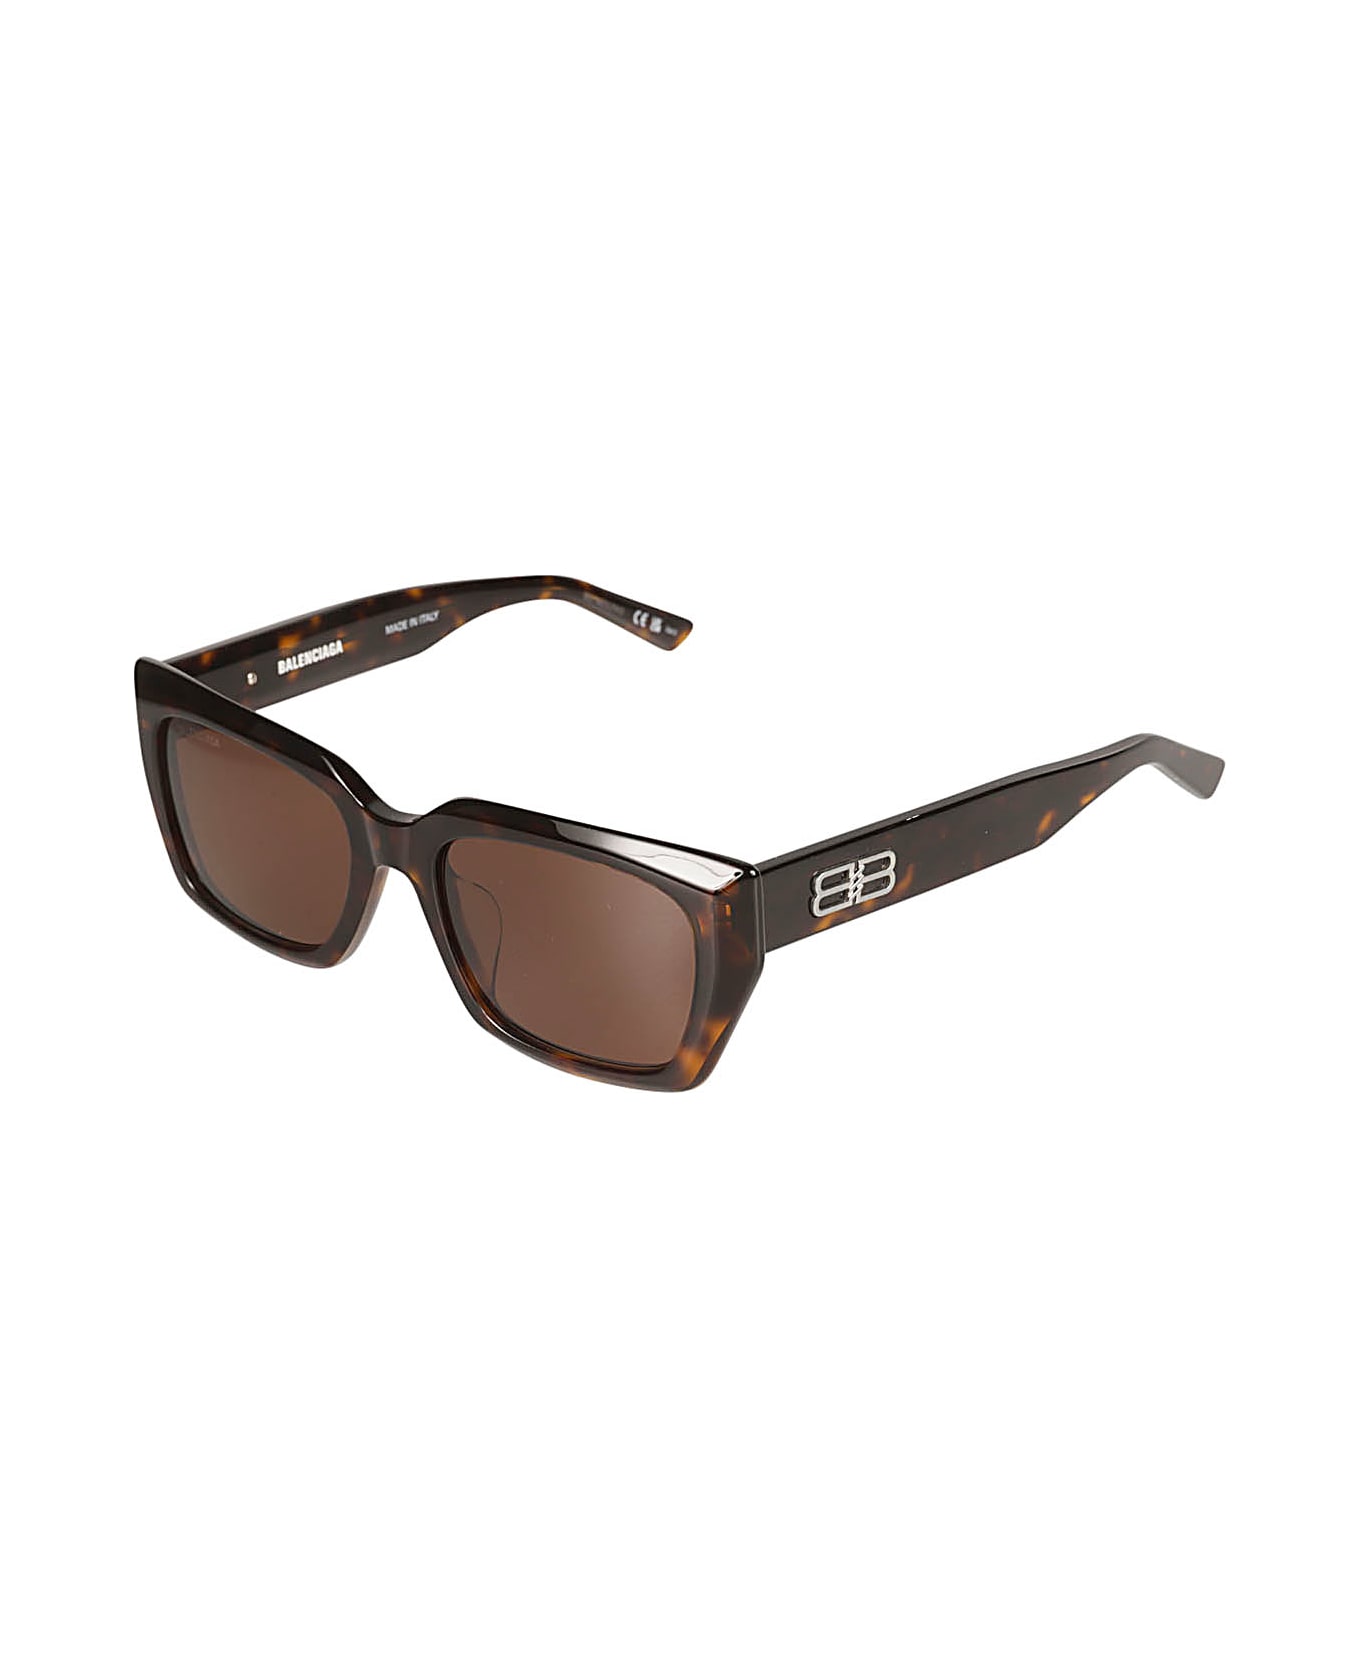 Balenciaga Eyewear Bb Plaque Square Frame Sunglasses - Havana/Brown